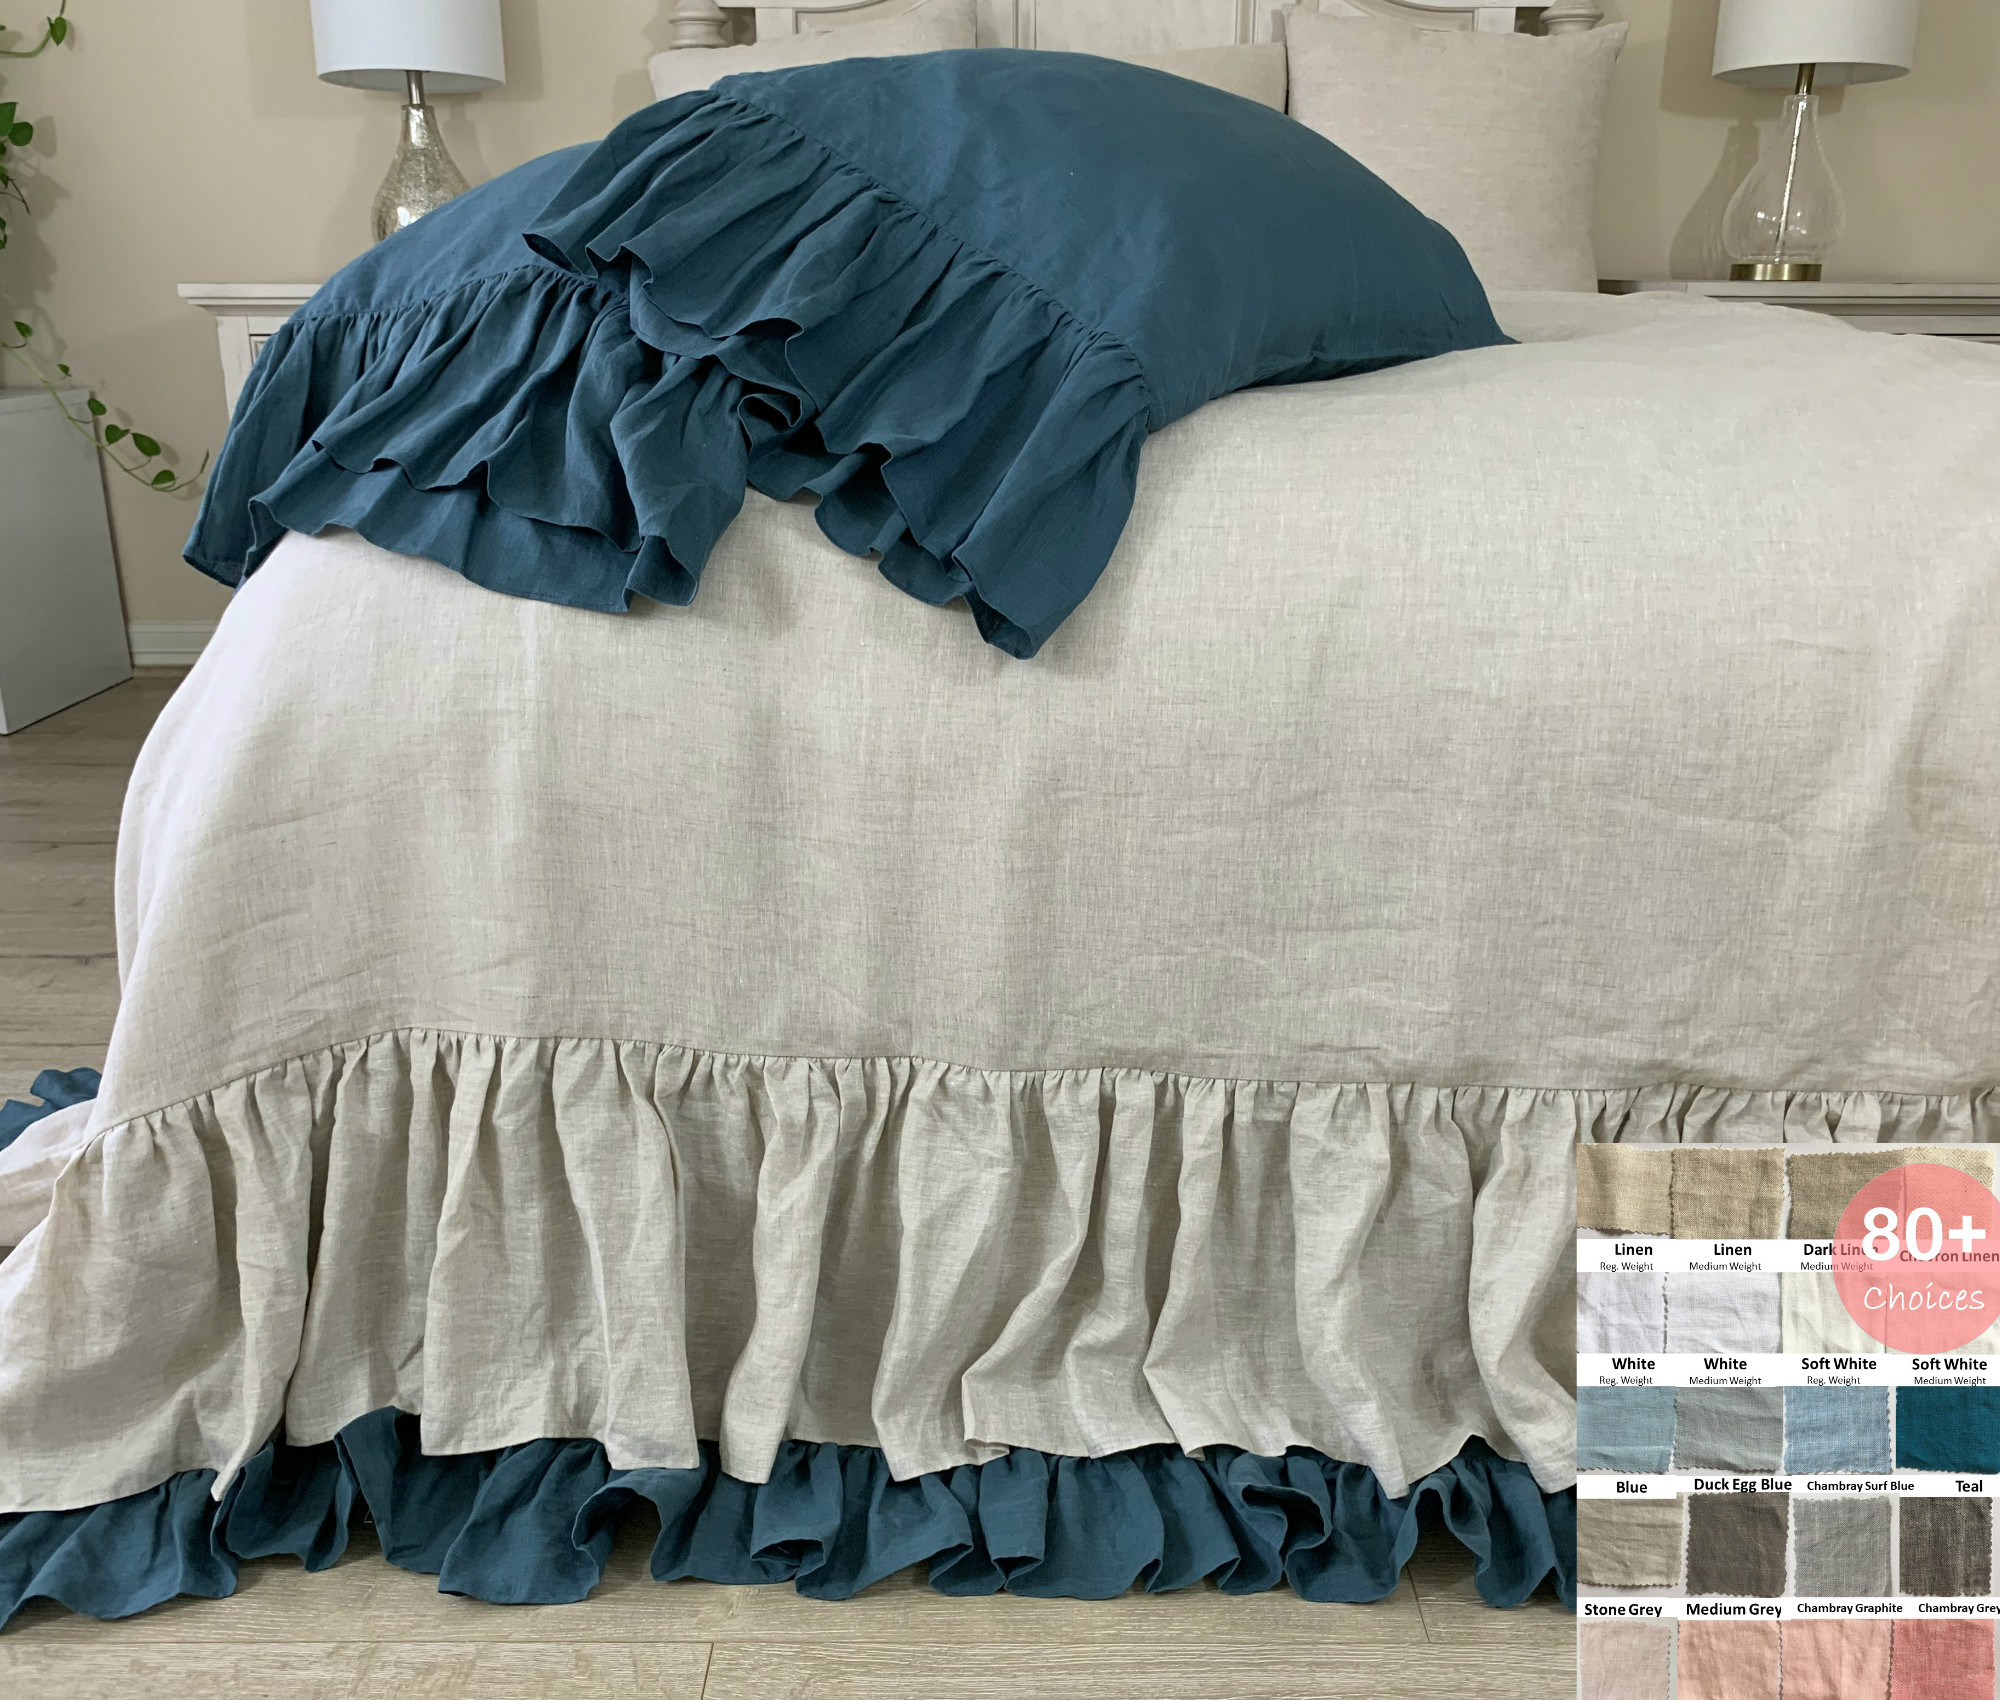 Linen Bedding Set in Charcoal Gray dark Gray Color. King, Queen Linen Duvet  Cover 2 Pillowcases. 